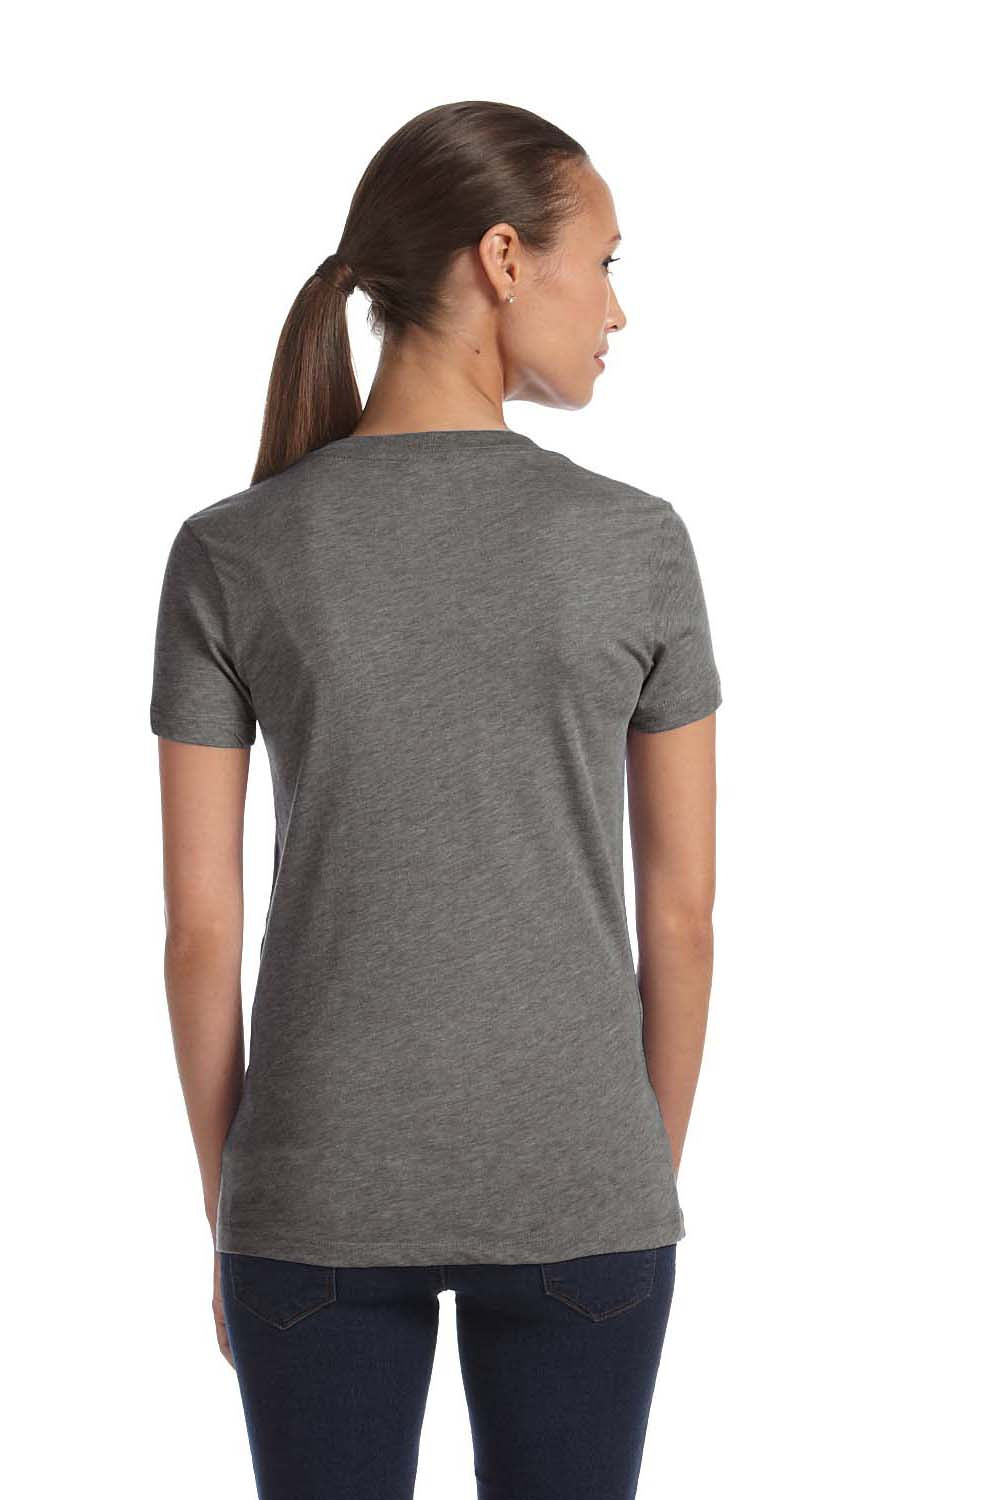 Bella + Canvas 8435 Womens Short Sleeve Deep V-Neck T-Shirt Grey Model Back